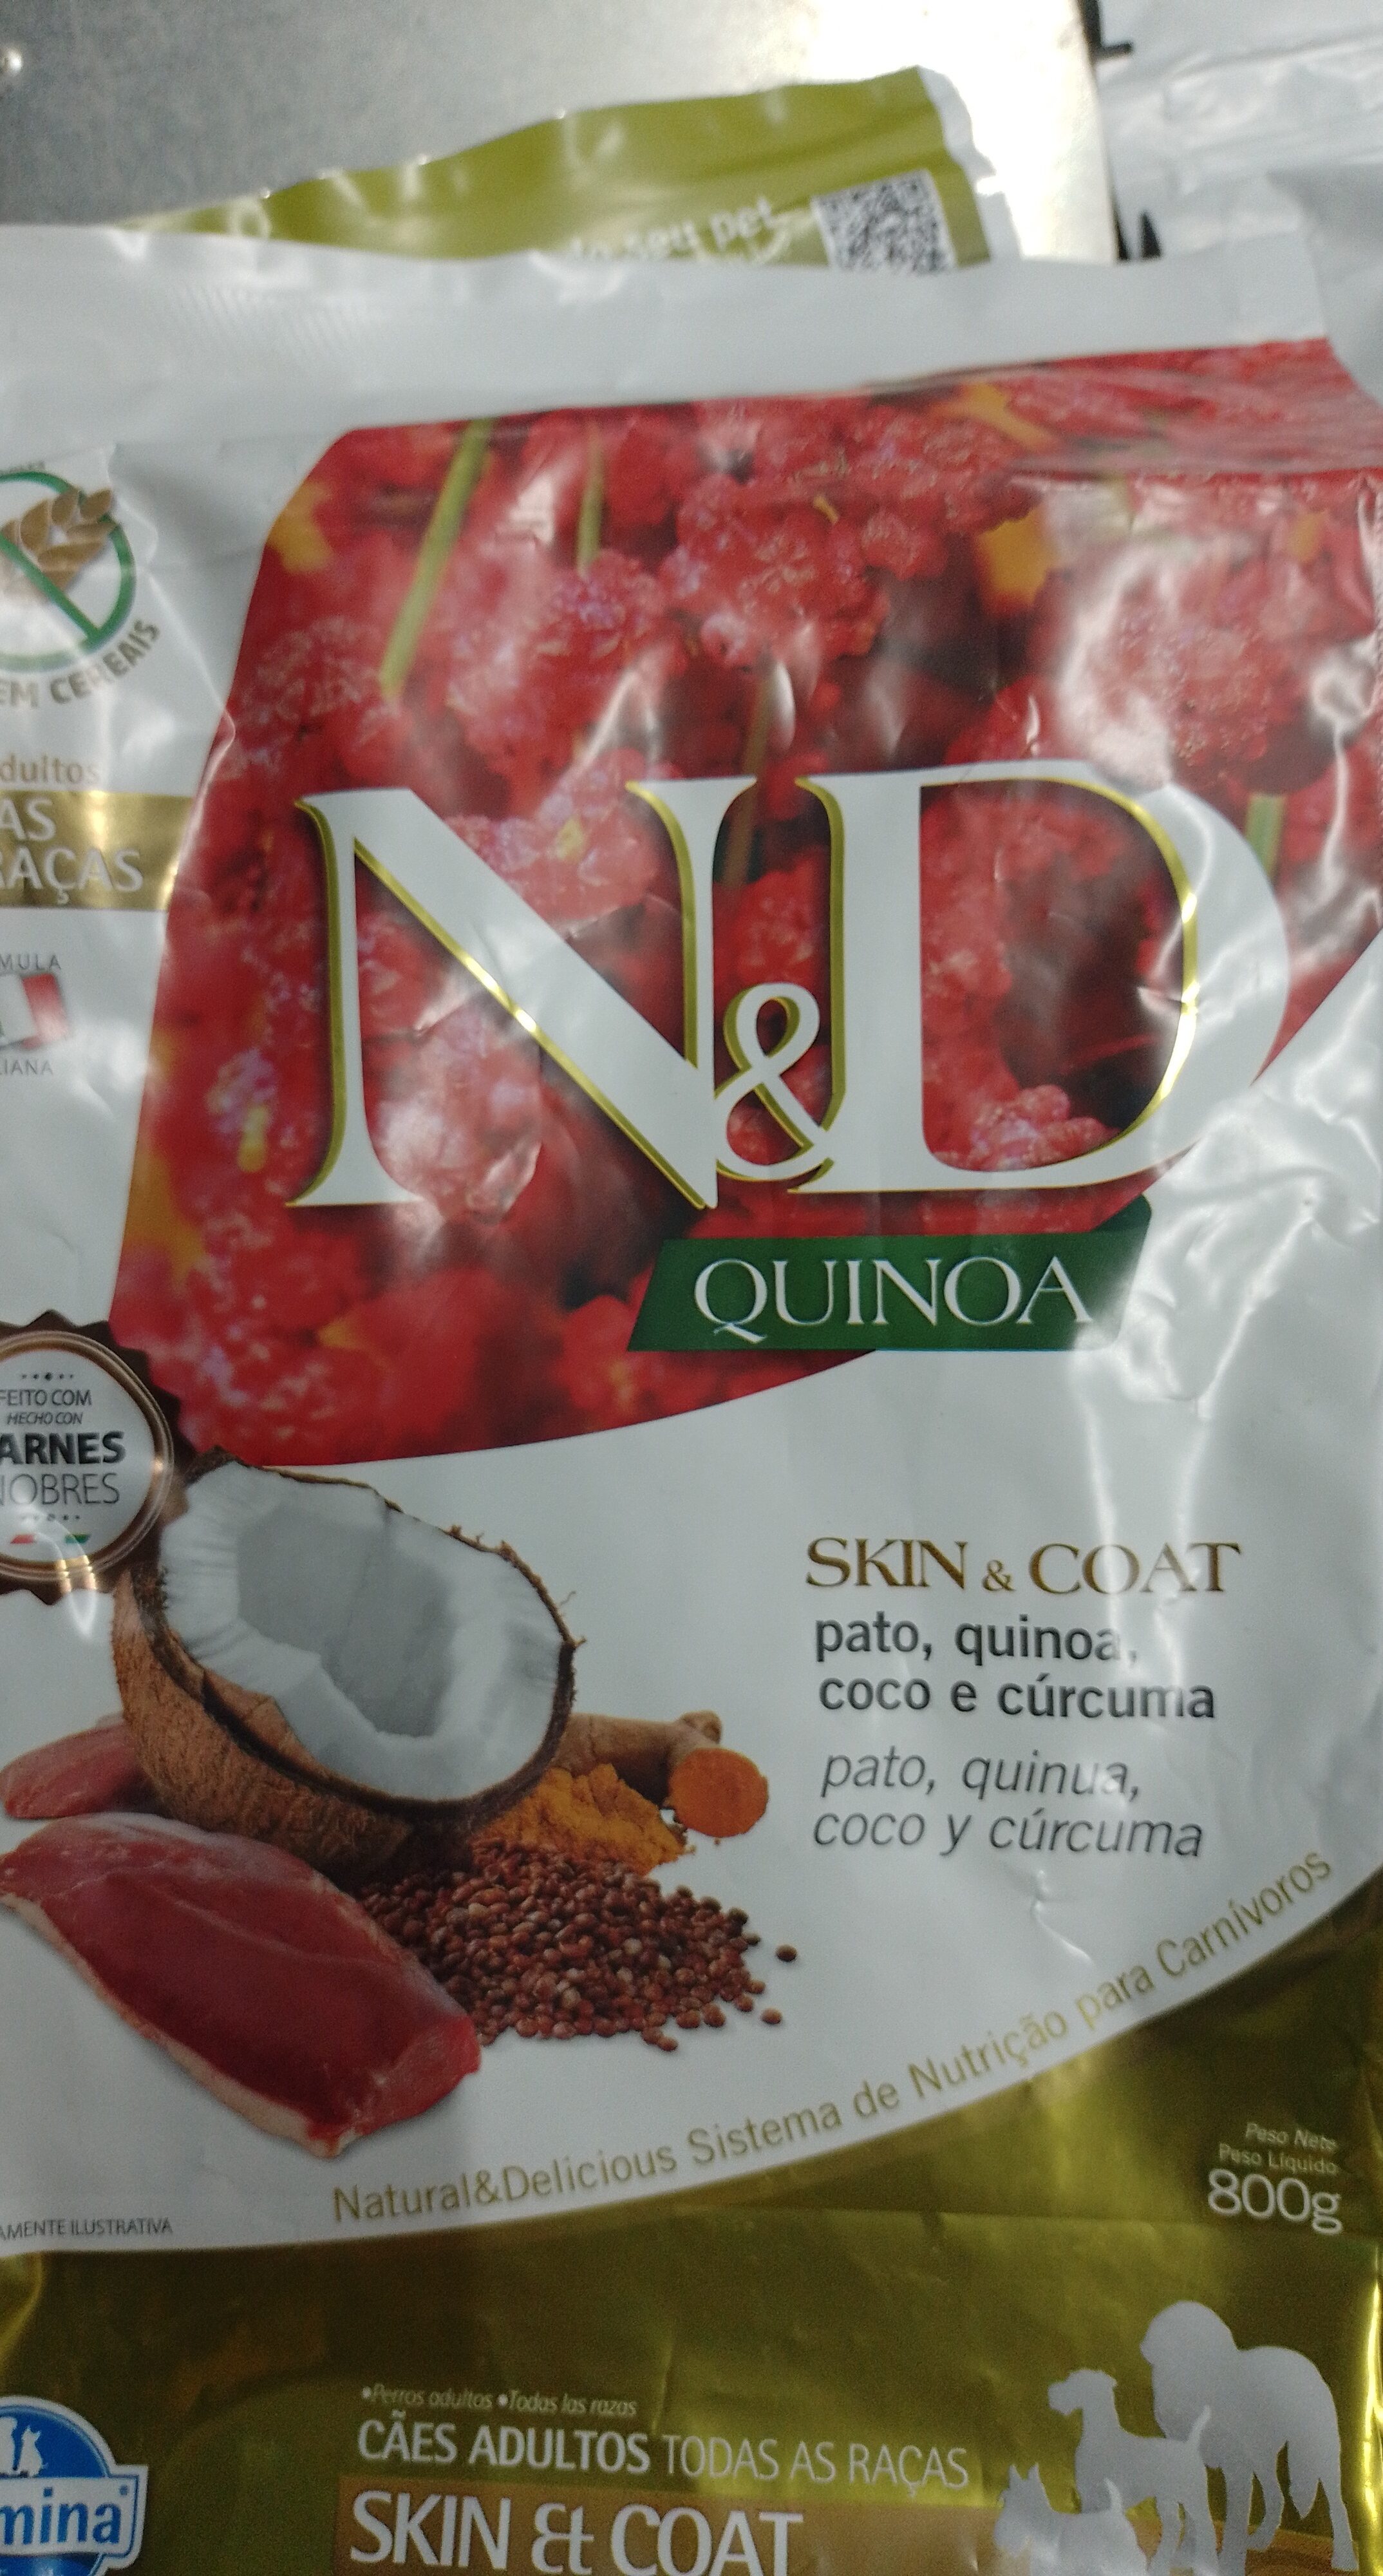 ND Quinoa Skin Coat Pato 800gr - Product - pt